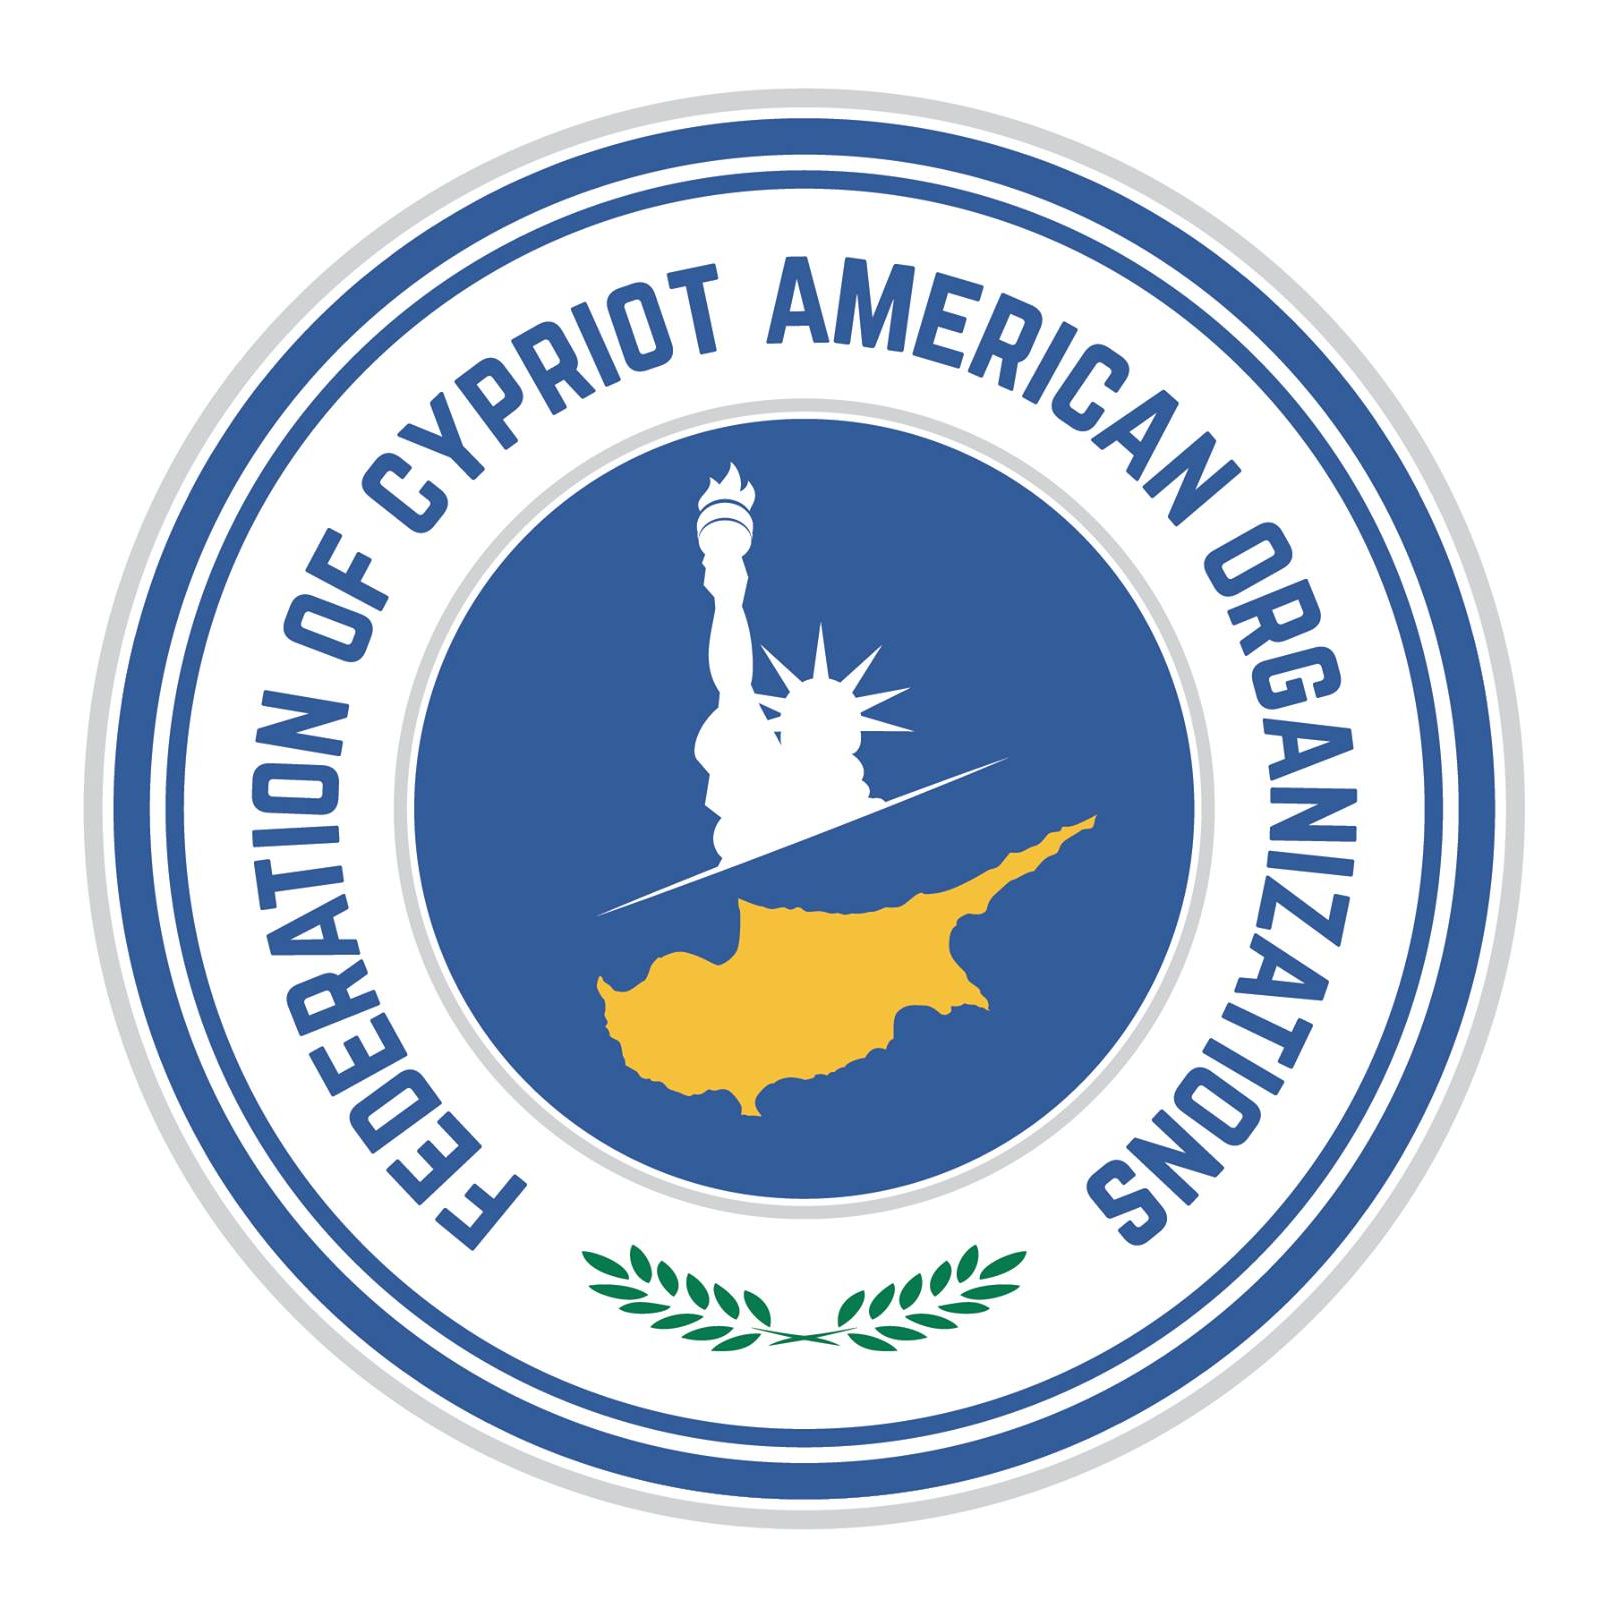 Greek Charity Organizations in USA - Federation of Cypriot American Organizations